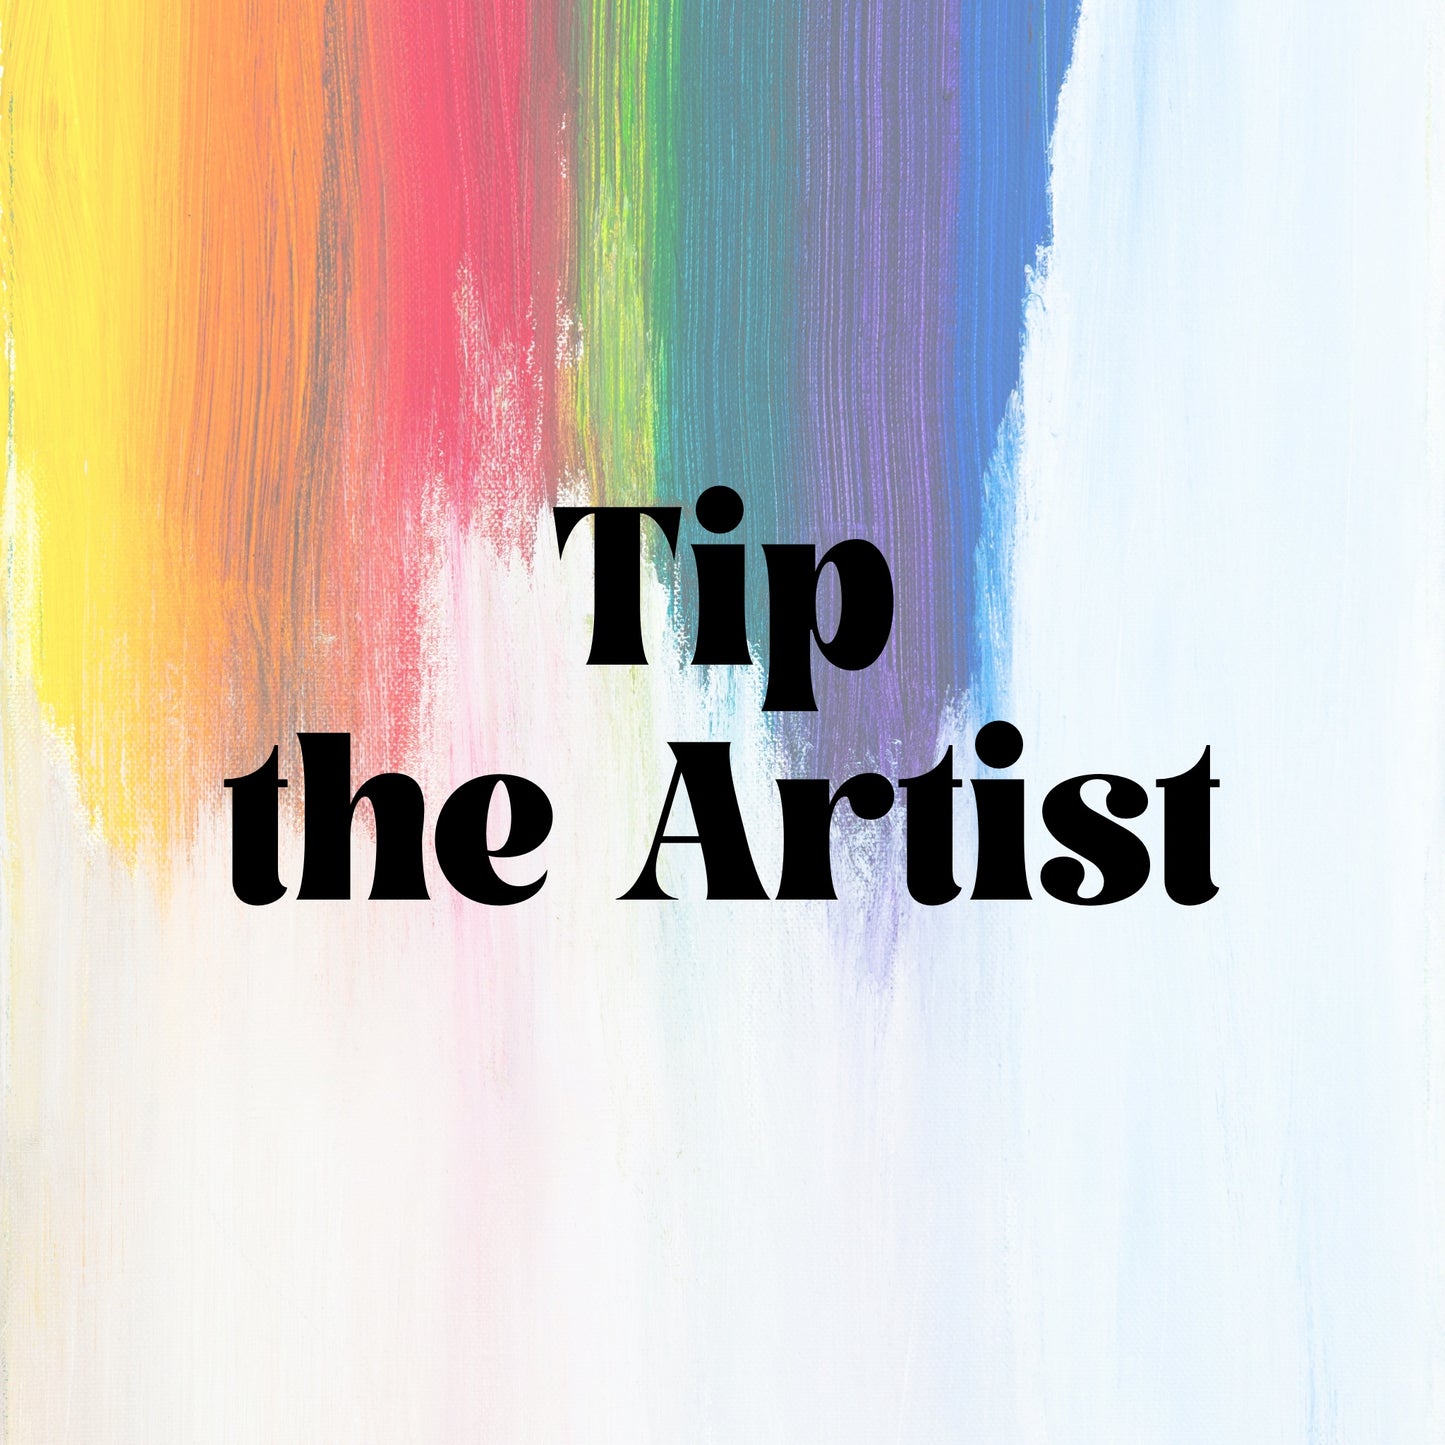 Tip the Artist